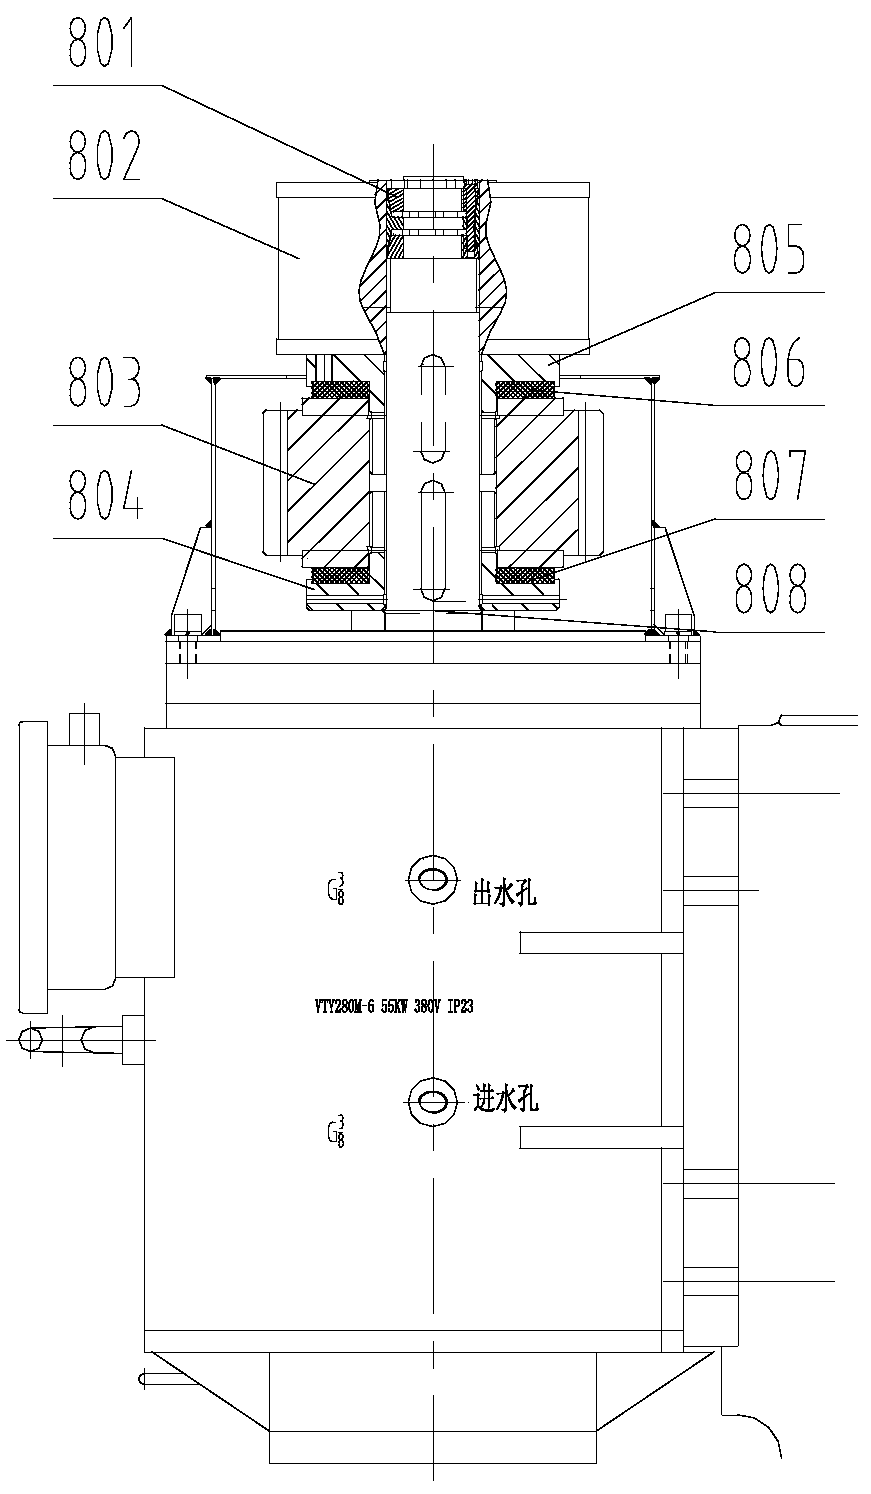 Numerical control electric screw press